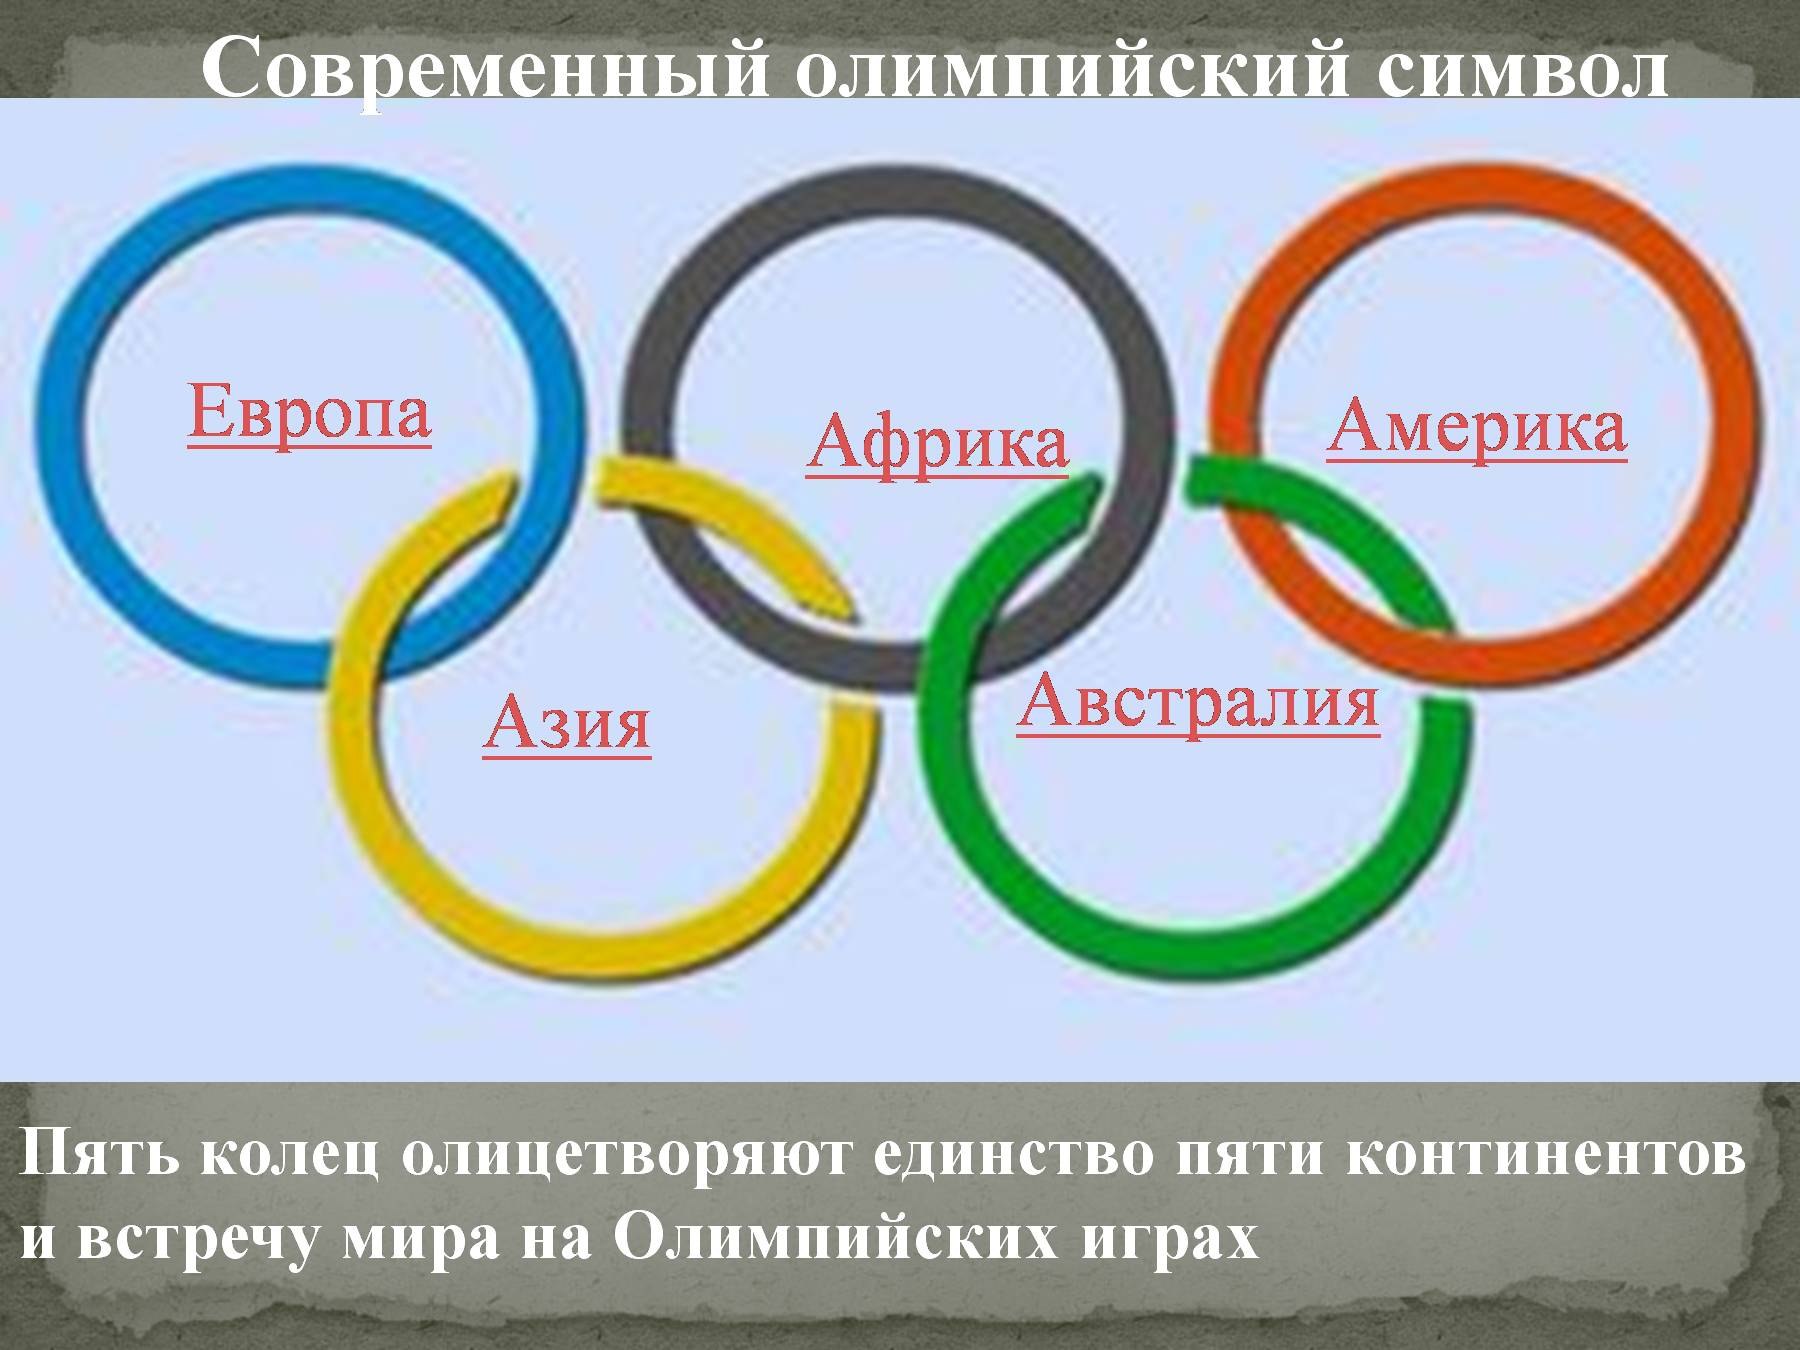 Кольцо америки на олимпиаде. Кольца Олимпийских игр. 5 Колец Олимпийских игр. Олимпийский символ.